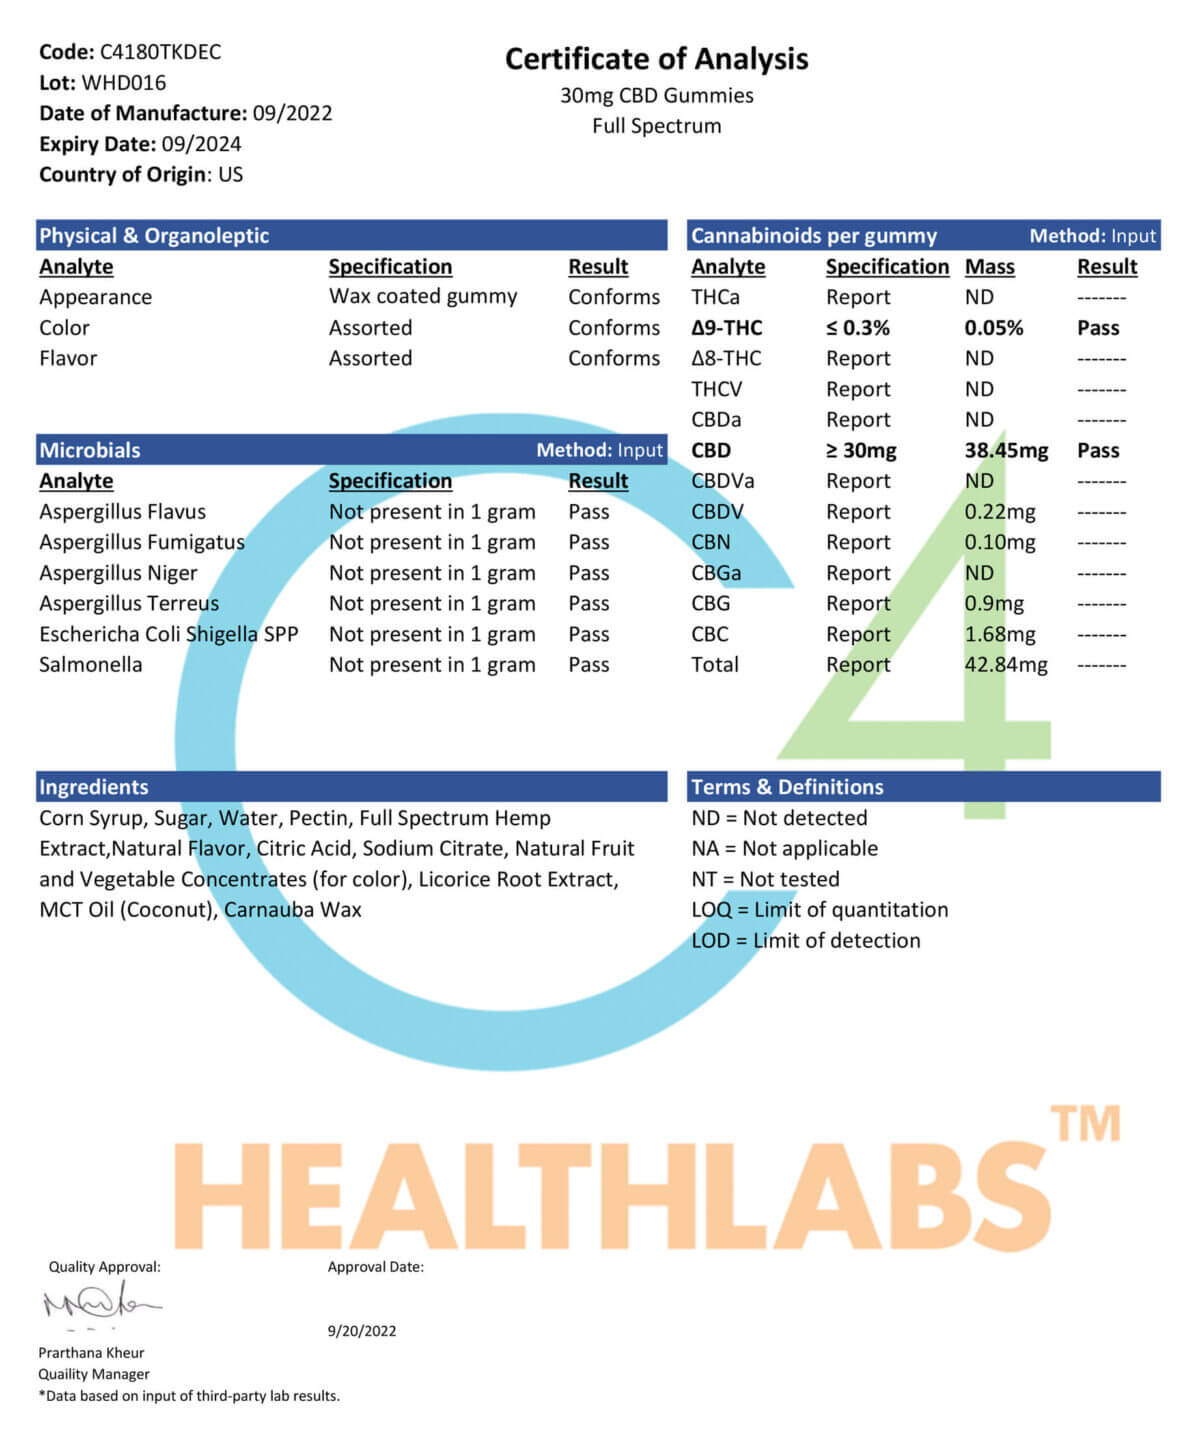 C4 Healthlabs 30 mg Full Spectrum CBD Gummies Certificate of Analysis - Lot# WHD016